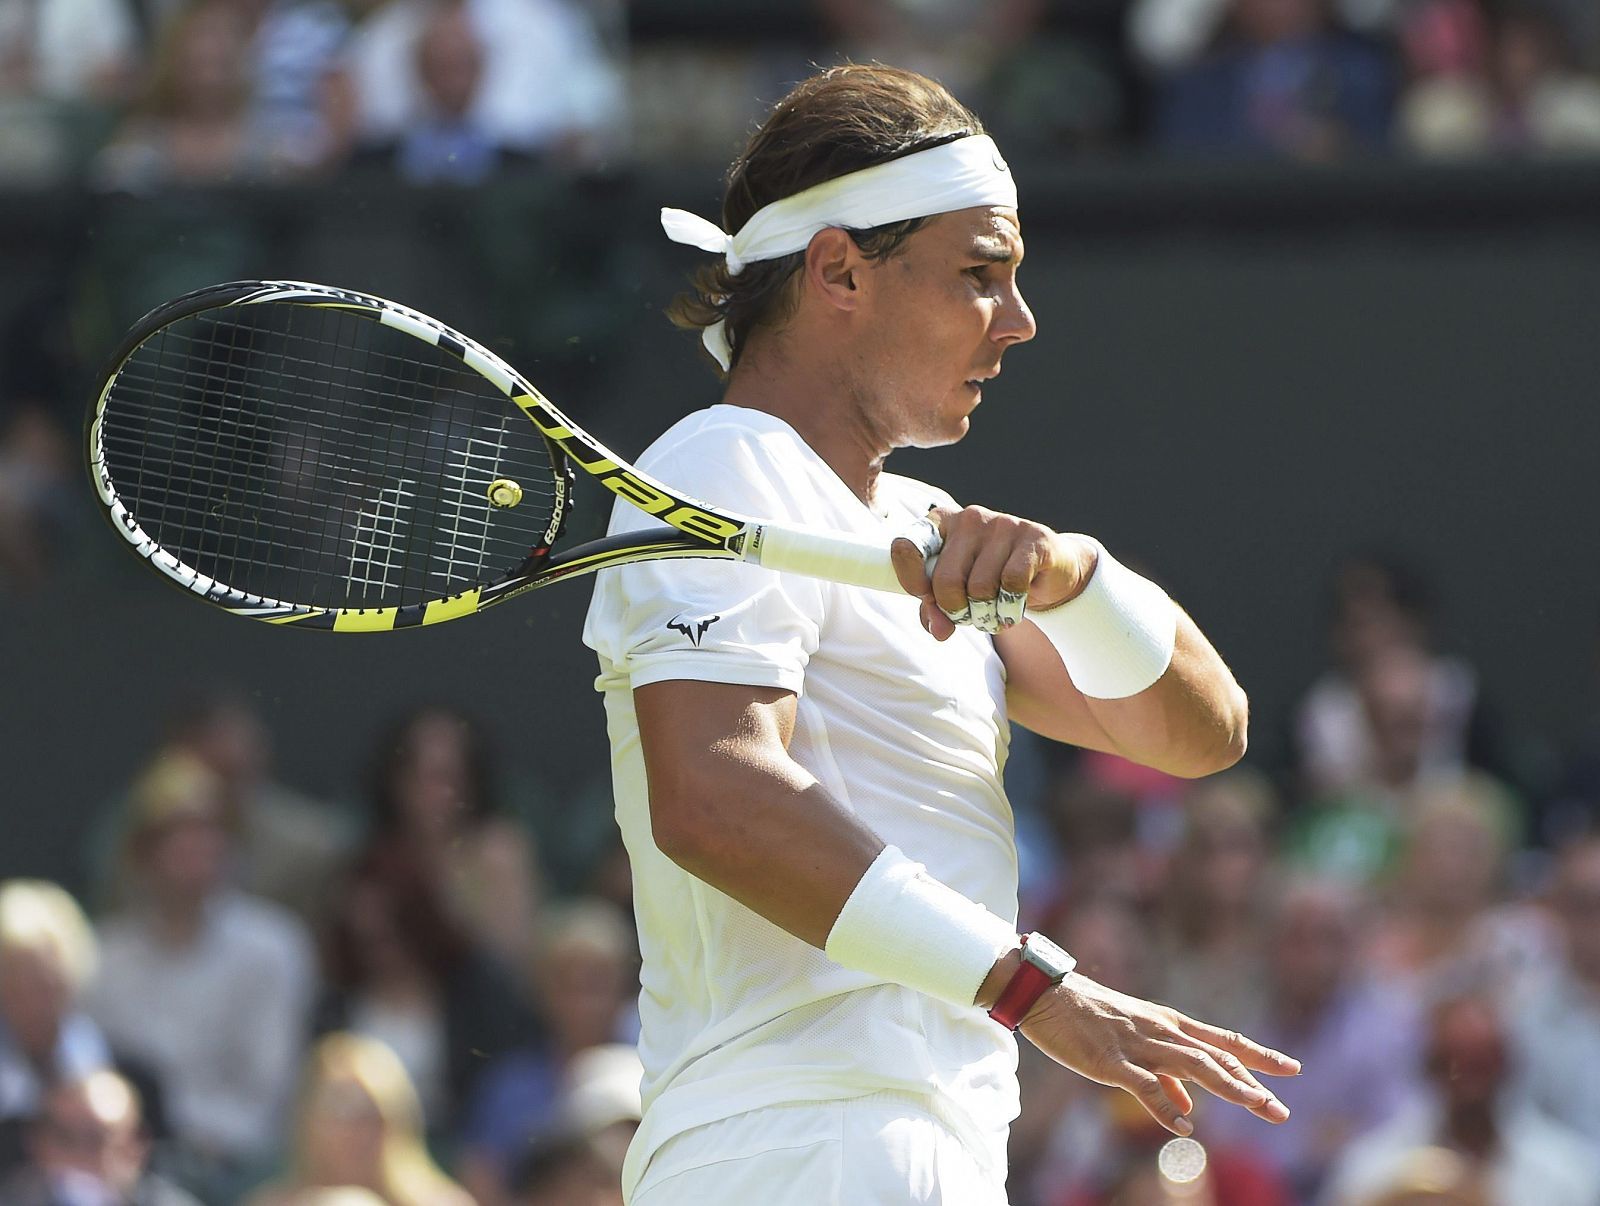 El tenista español, Rafael Nadal, en el pasado Wimbledon.